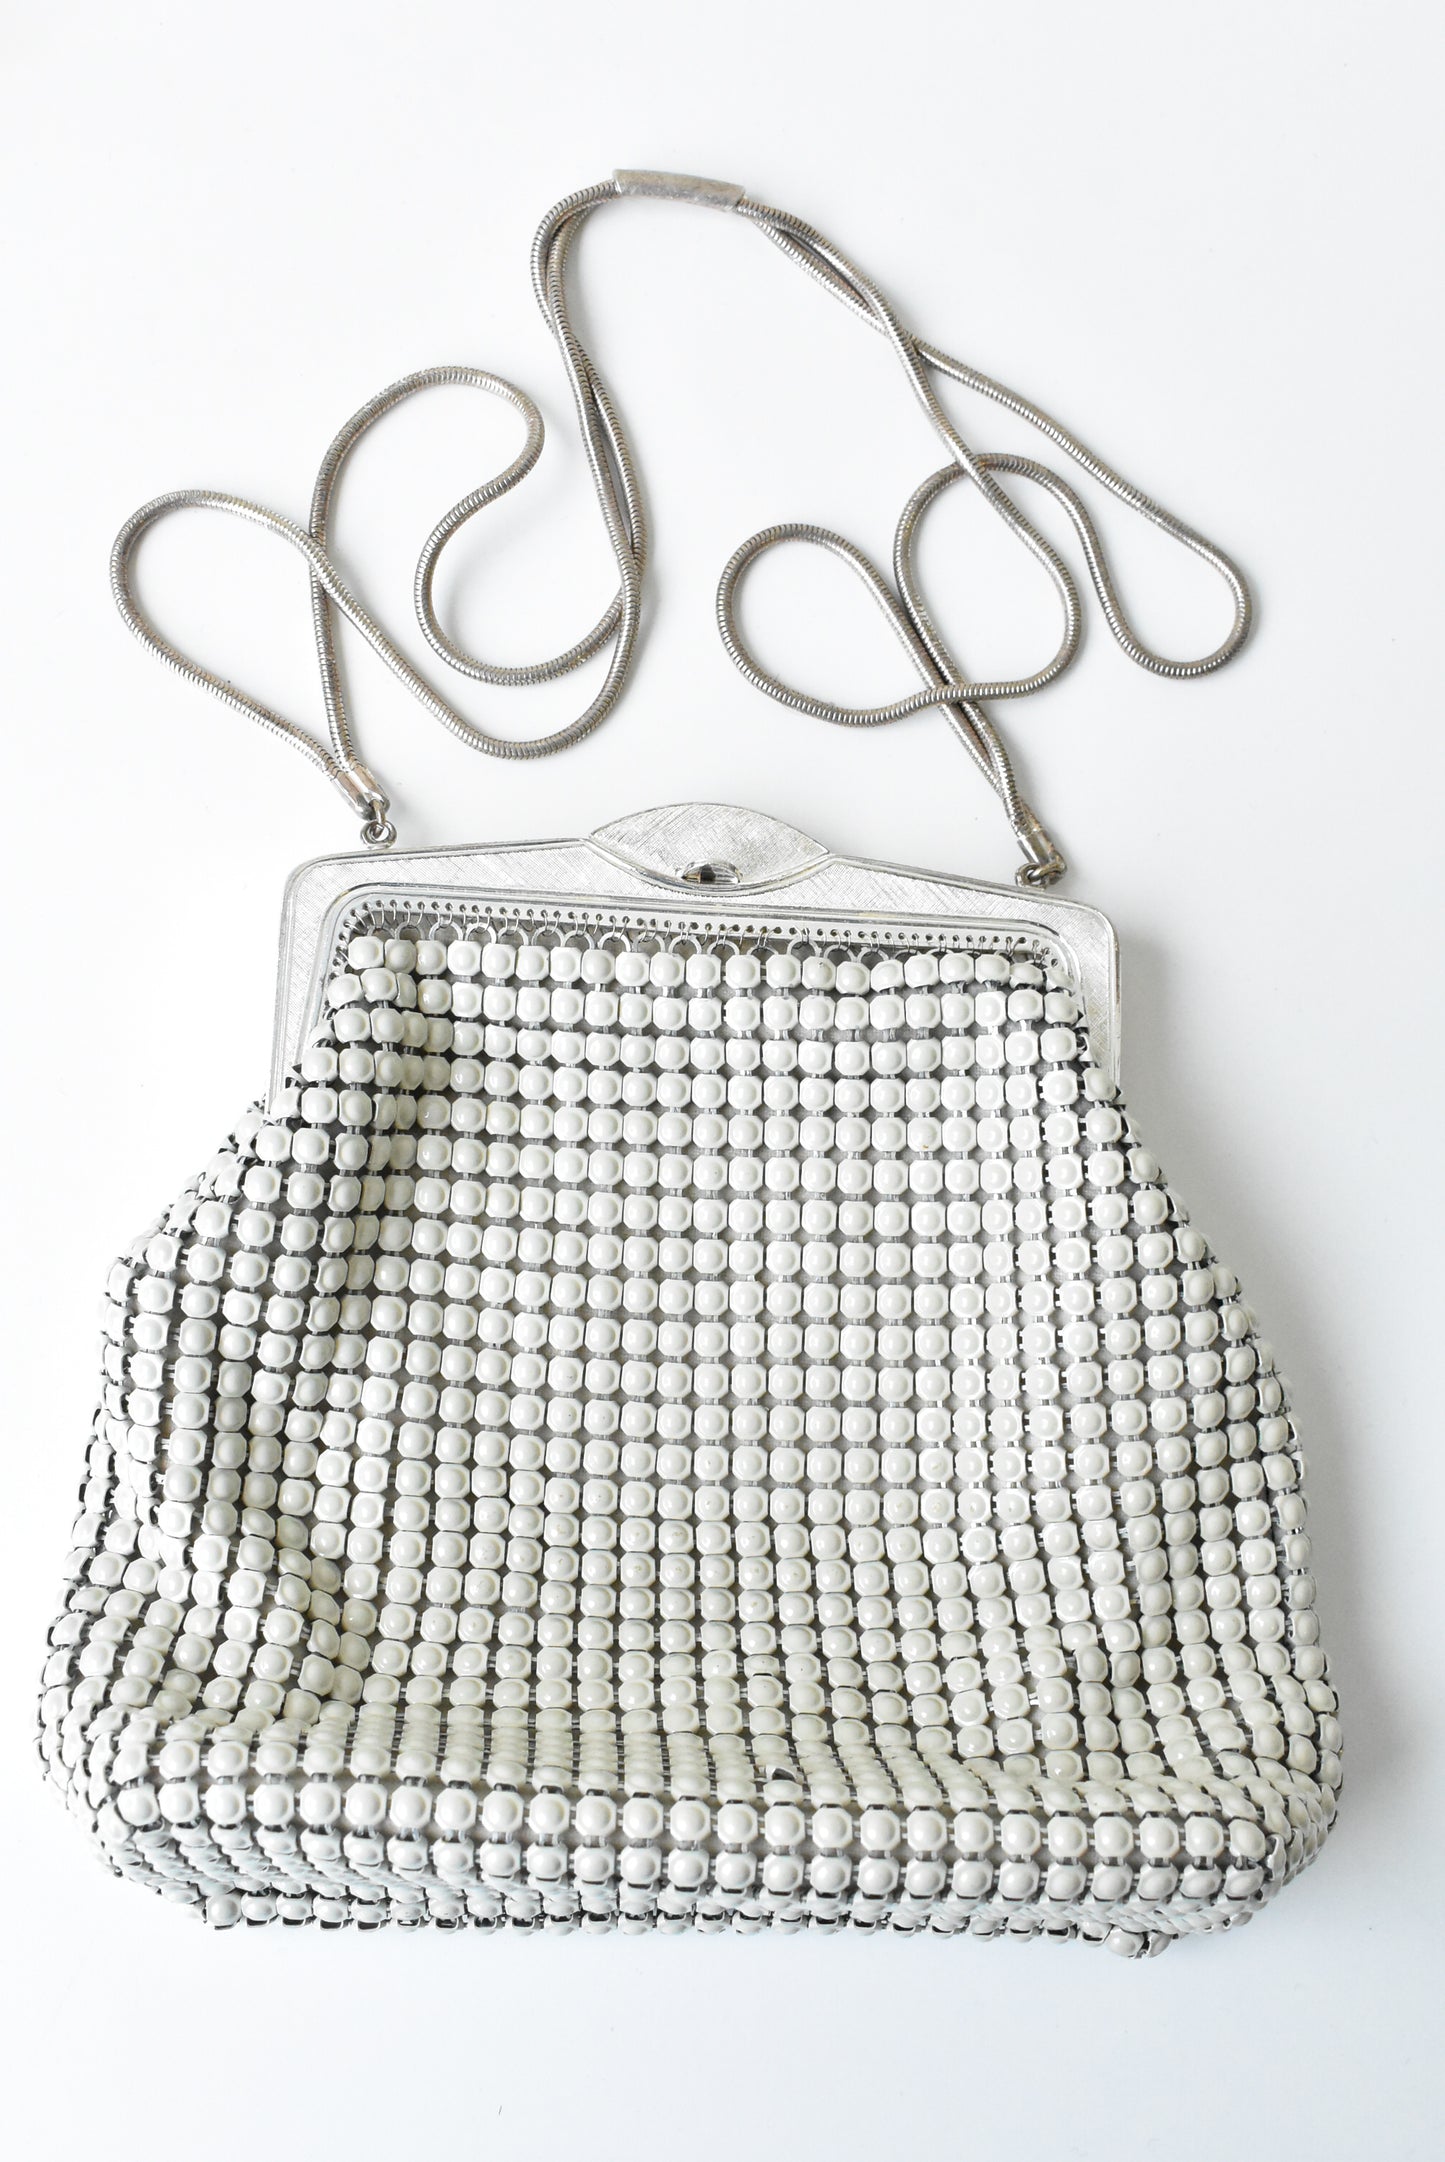 Oroton vintage mesh style clutch purse